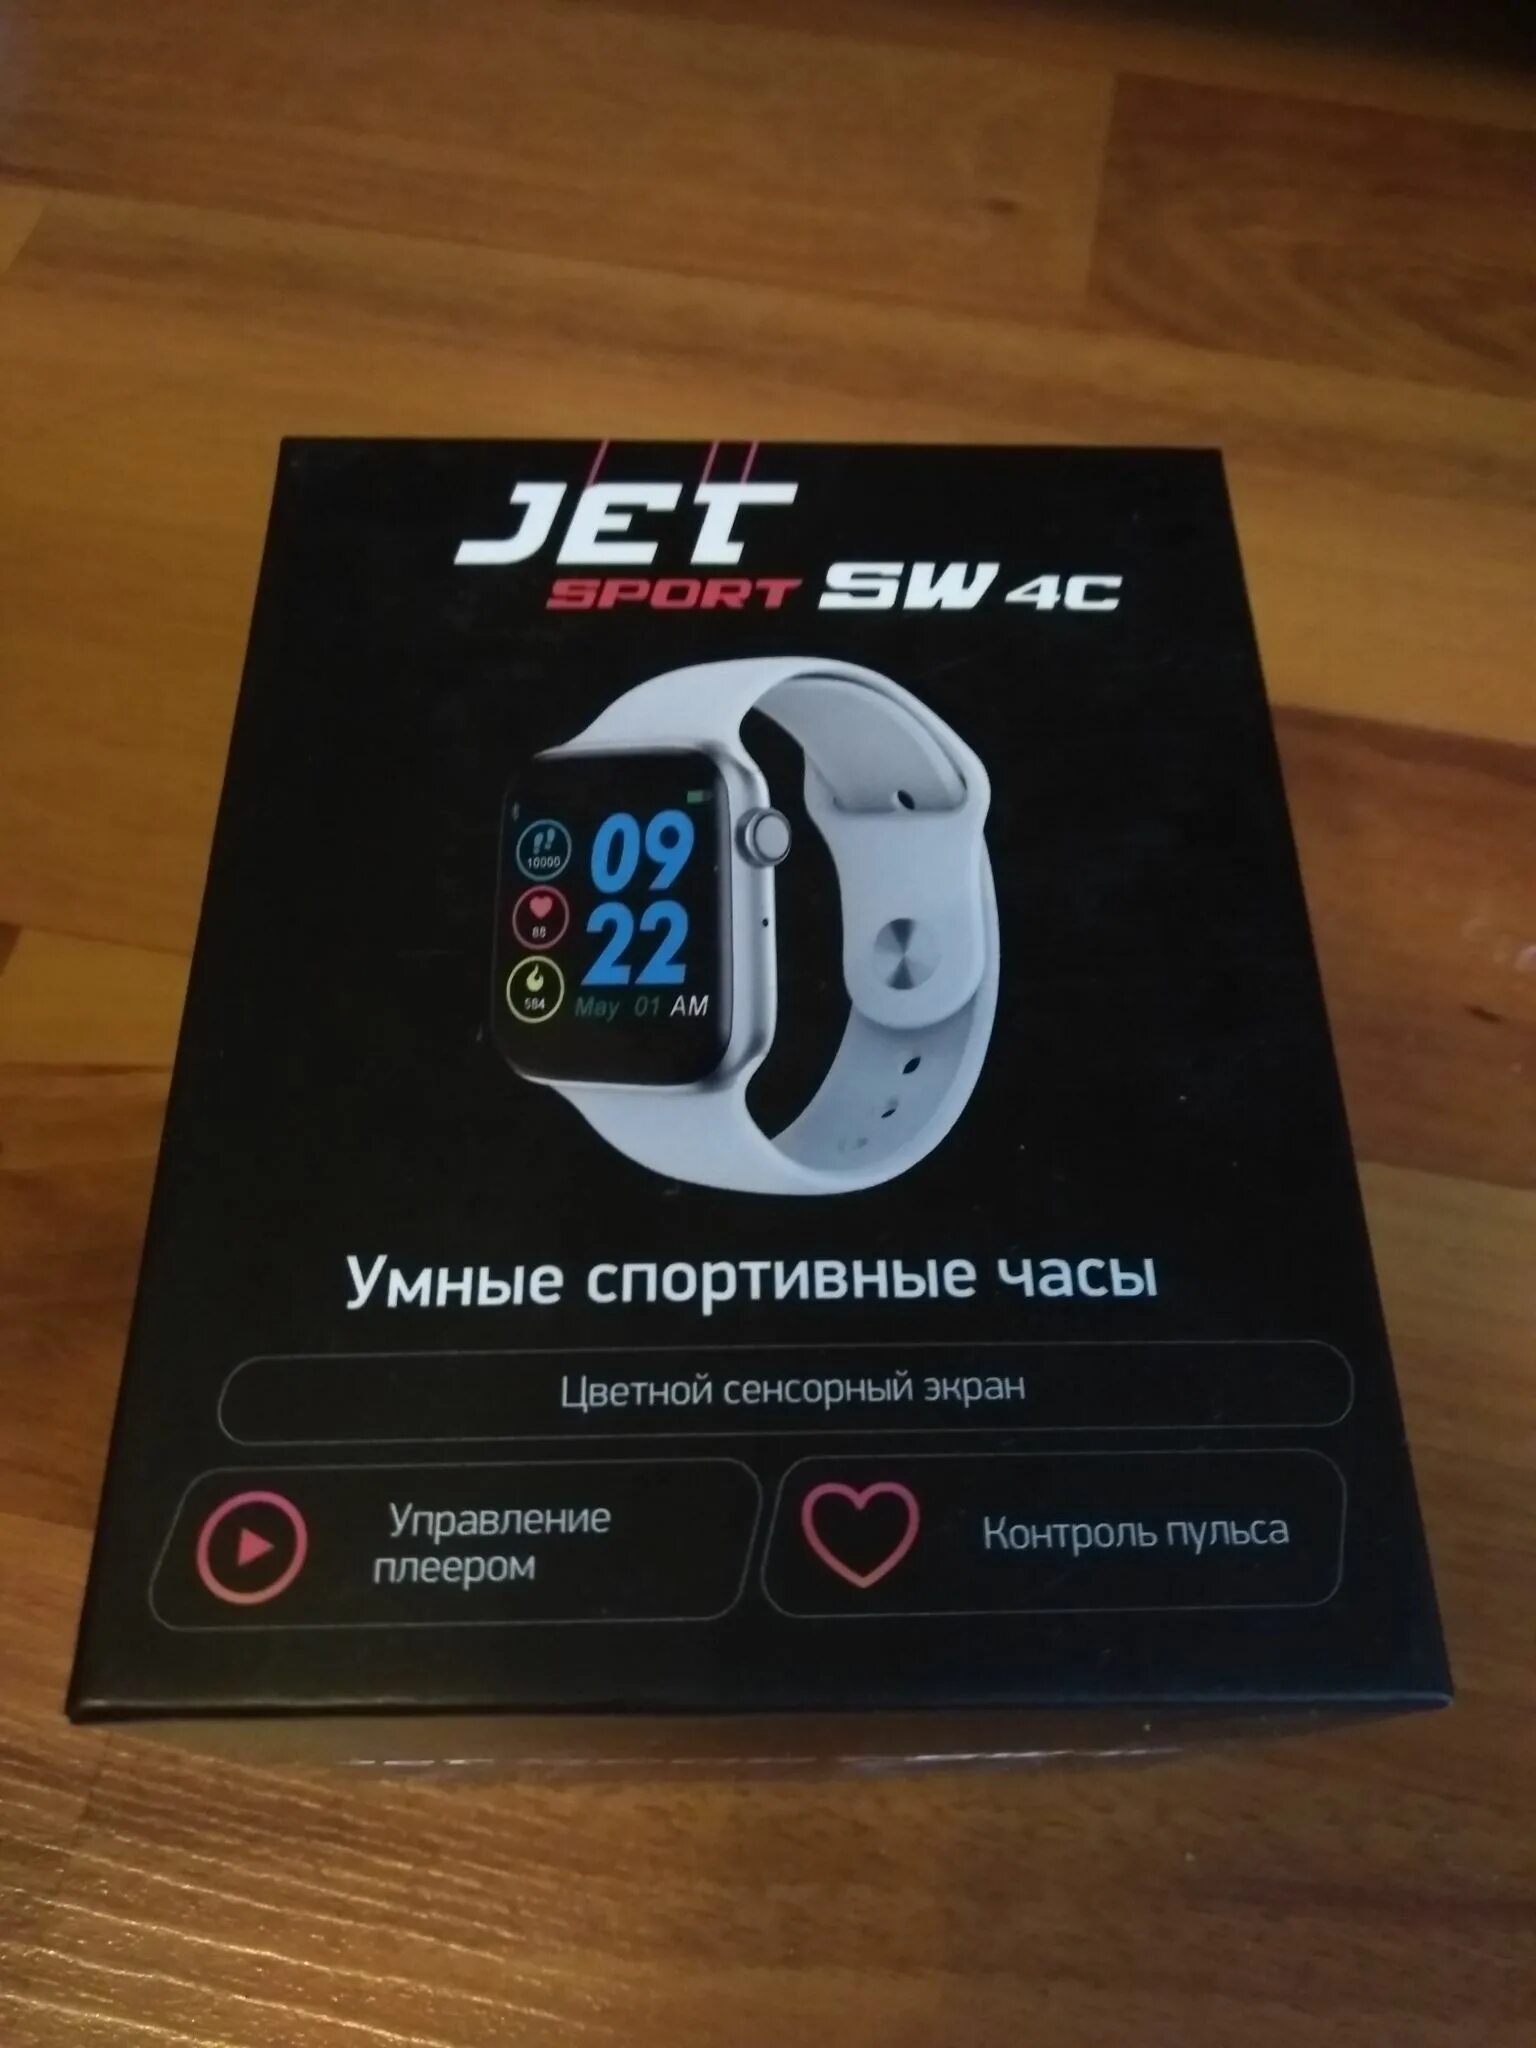 Jet Sport SW-4c. Смарт Jet Sport sw4. Спортивные часы Jet Sport SW-4c. Jet Sport SW-4c Silver. Часы sport sw 4c